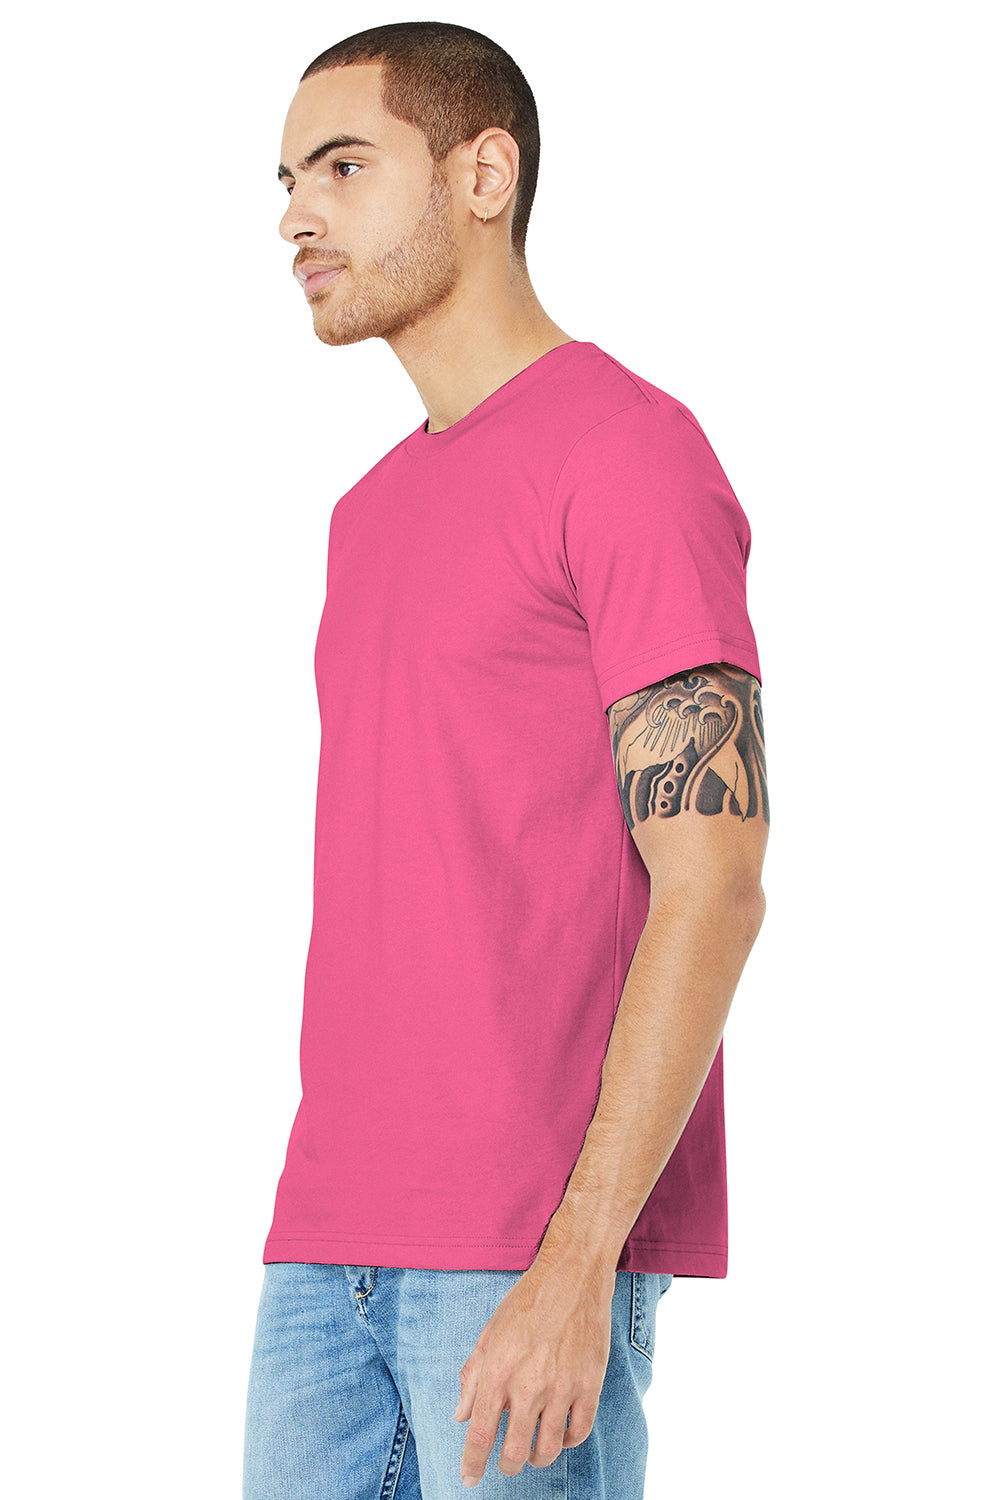 Bella + Canvas BC3001/3001C Mens Jersey Short Sleeve Crewneck T-Shirt Charity Pink Model 3Q